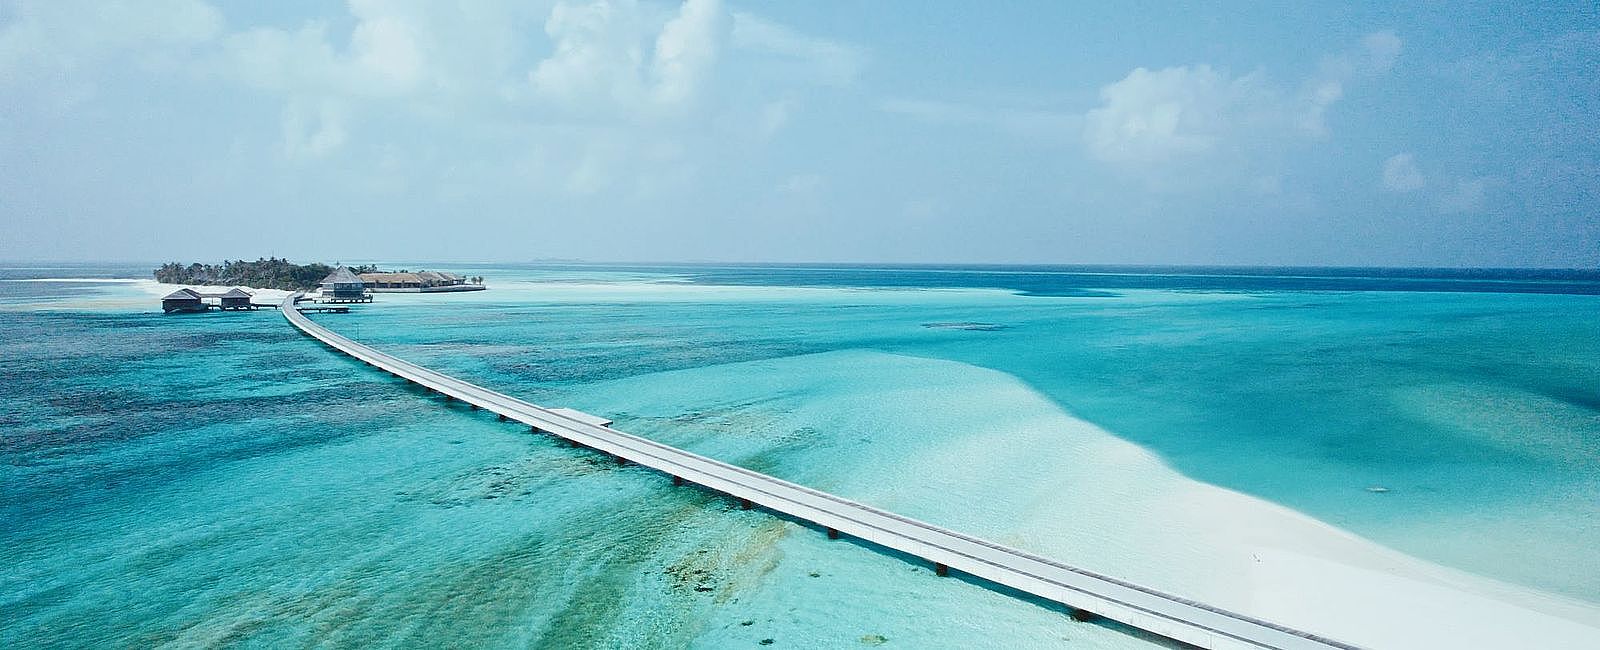 HOTEL ANGEBOTE
 JAWAKARA ISLANDS MALDIVES: -50% 
